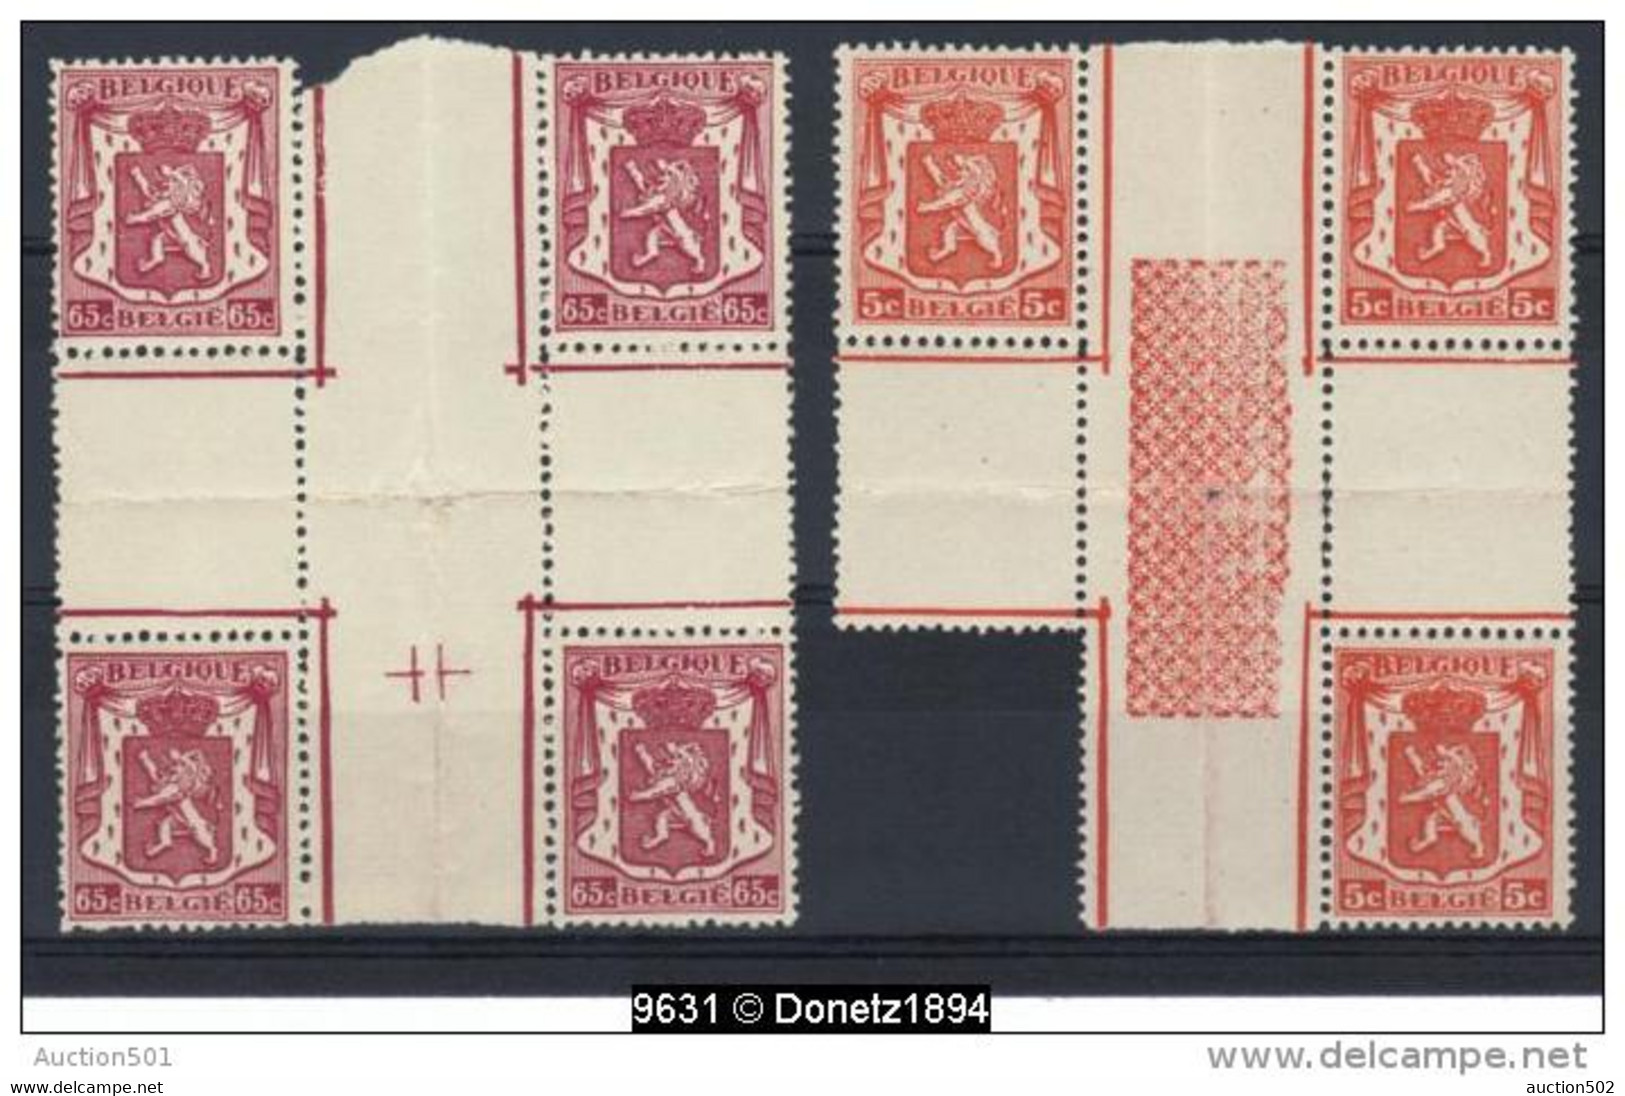 09631 Lot De Paires Et Blocs Interpanneau ** MNH - 1935-1949 Small Seal Of The State